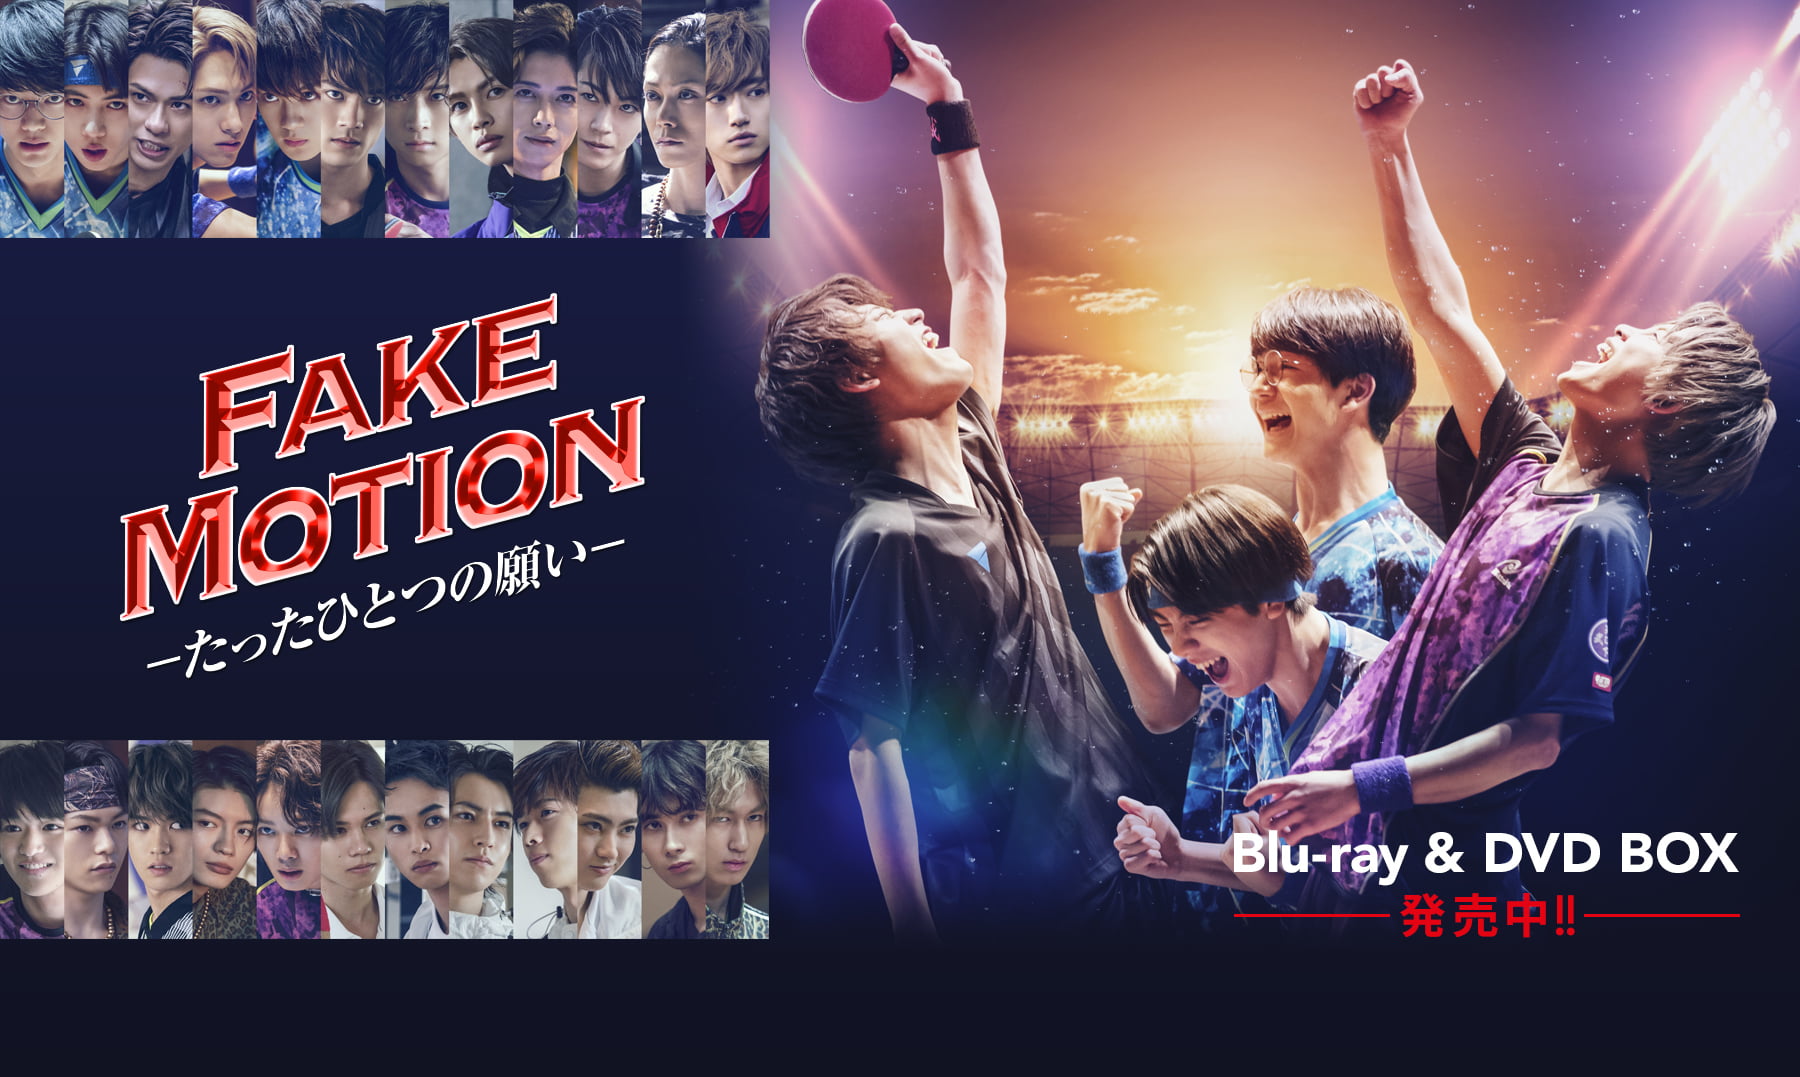 FAKE MOTION-卓球の王将- Blu-ray EBiDAN グッズ